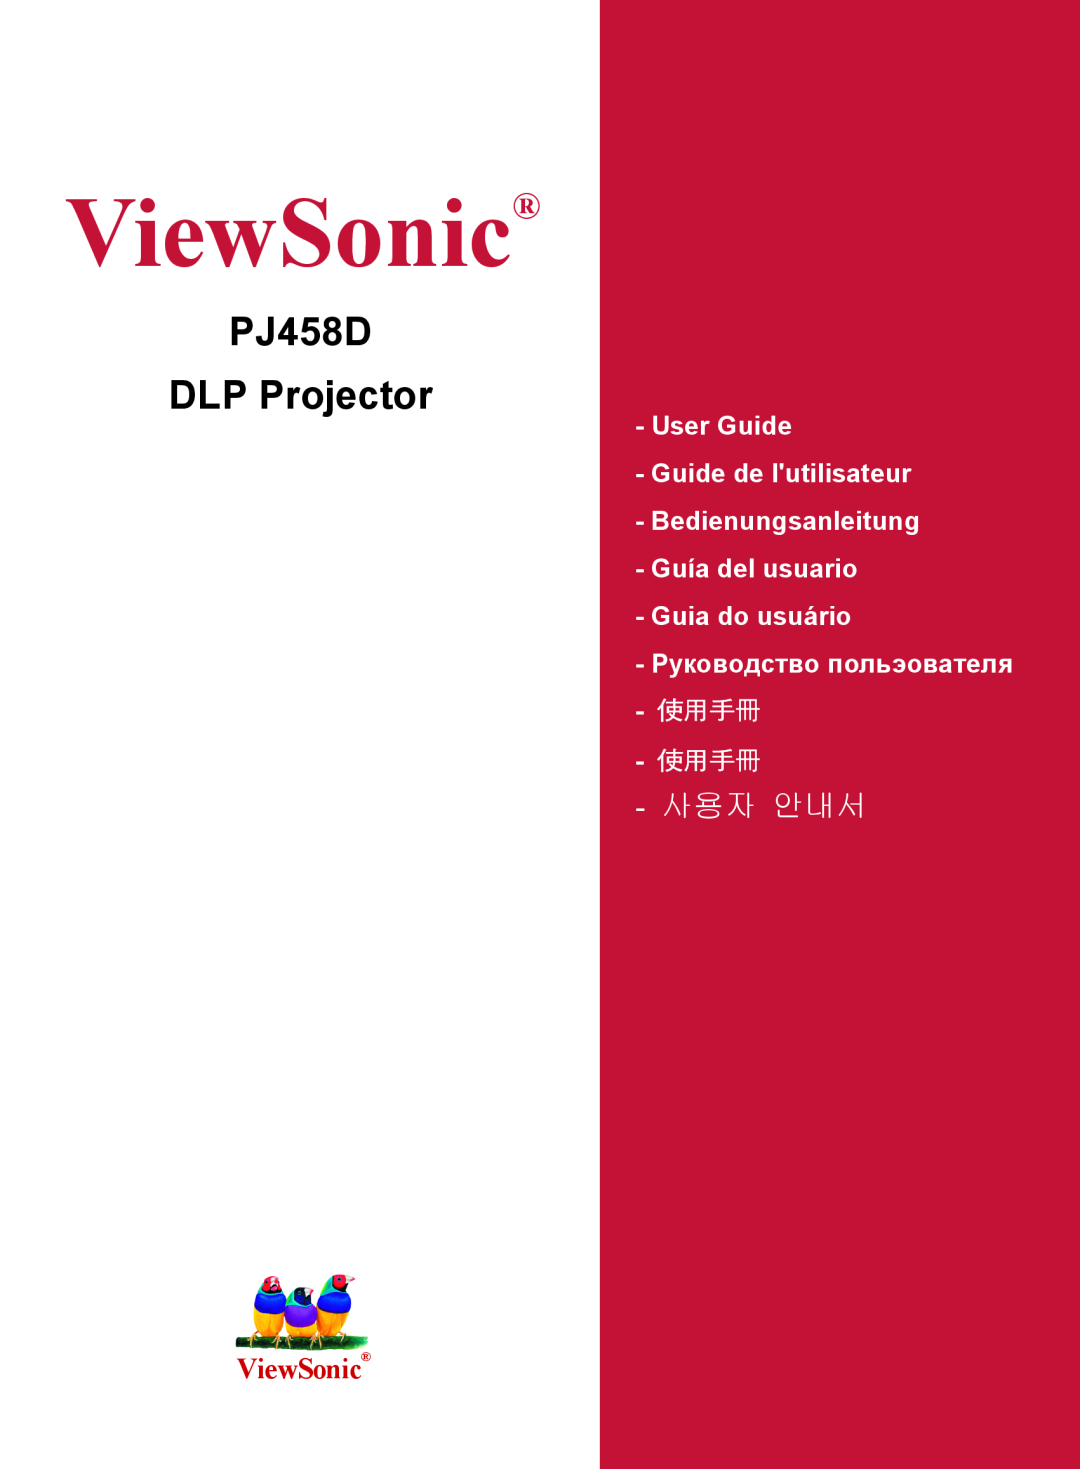 ViewSonic manual ViewSonic, PJ458D DLP Projector, 사용자 안내서, User Guide, Guia do usuário 